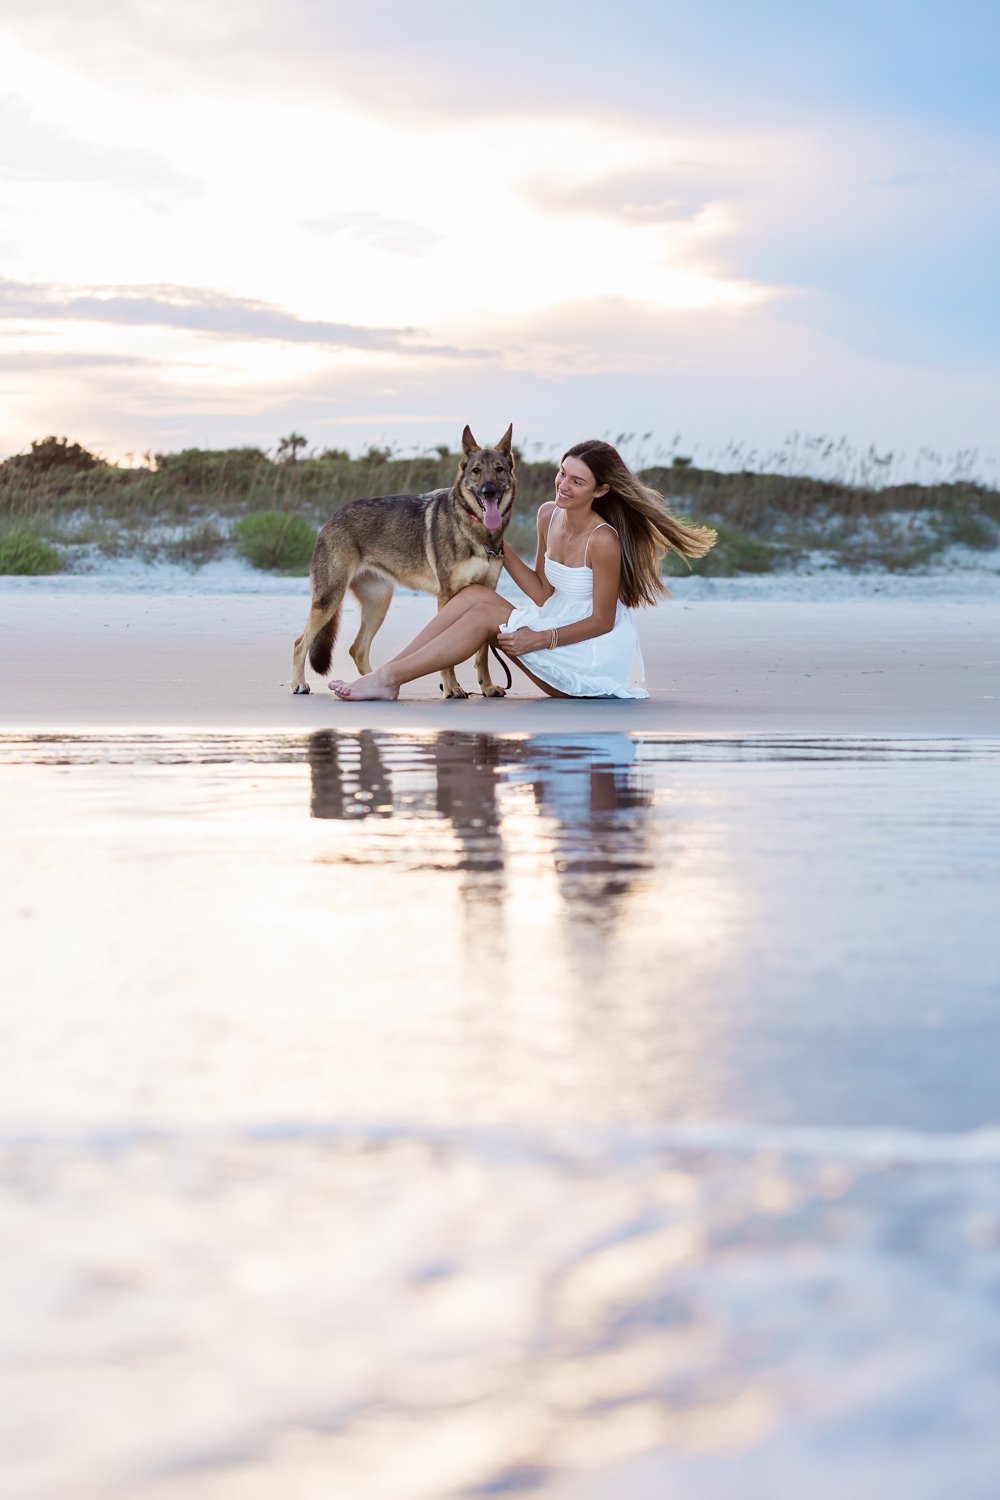 Sunset beach senior girl photoshotoot with a dog